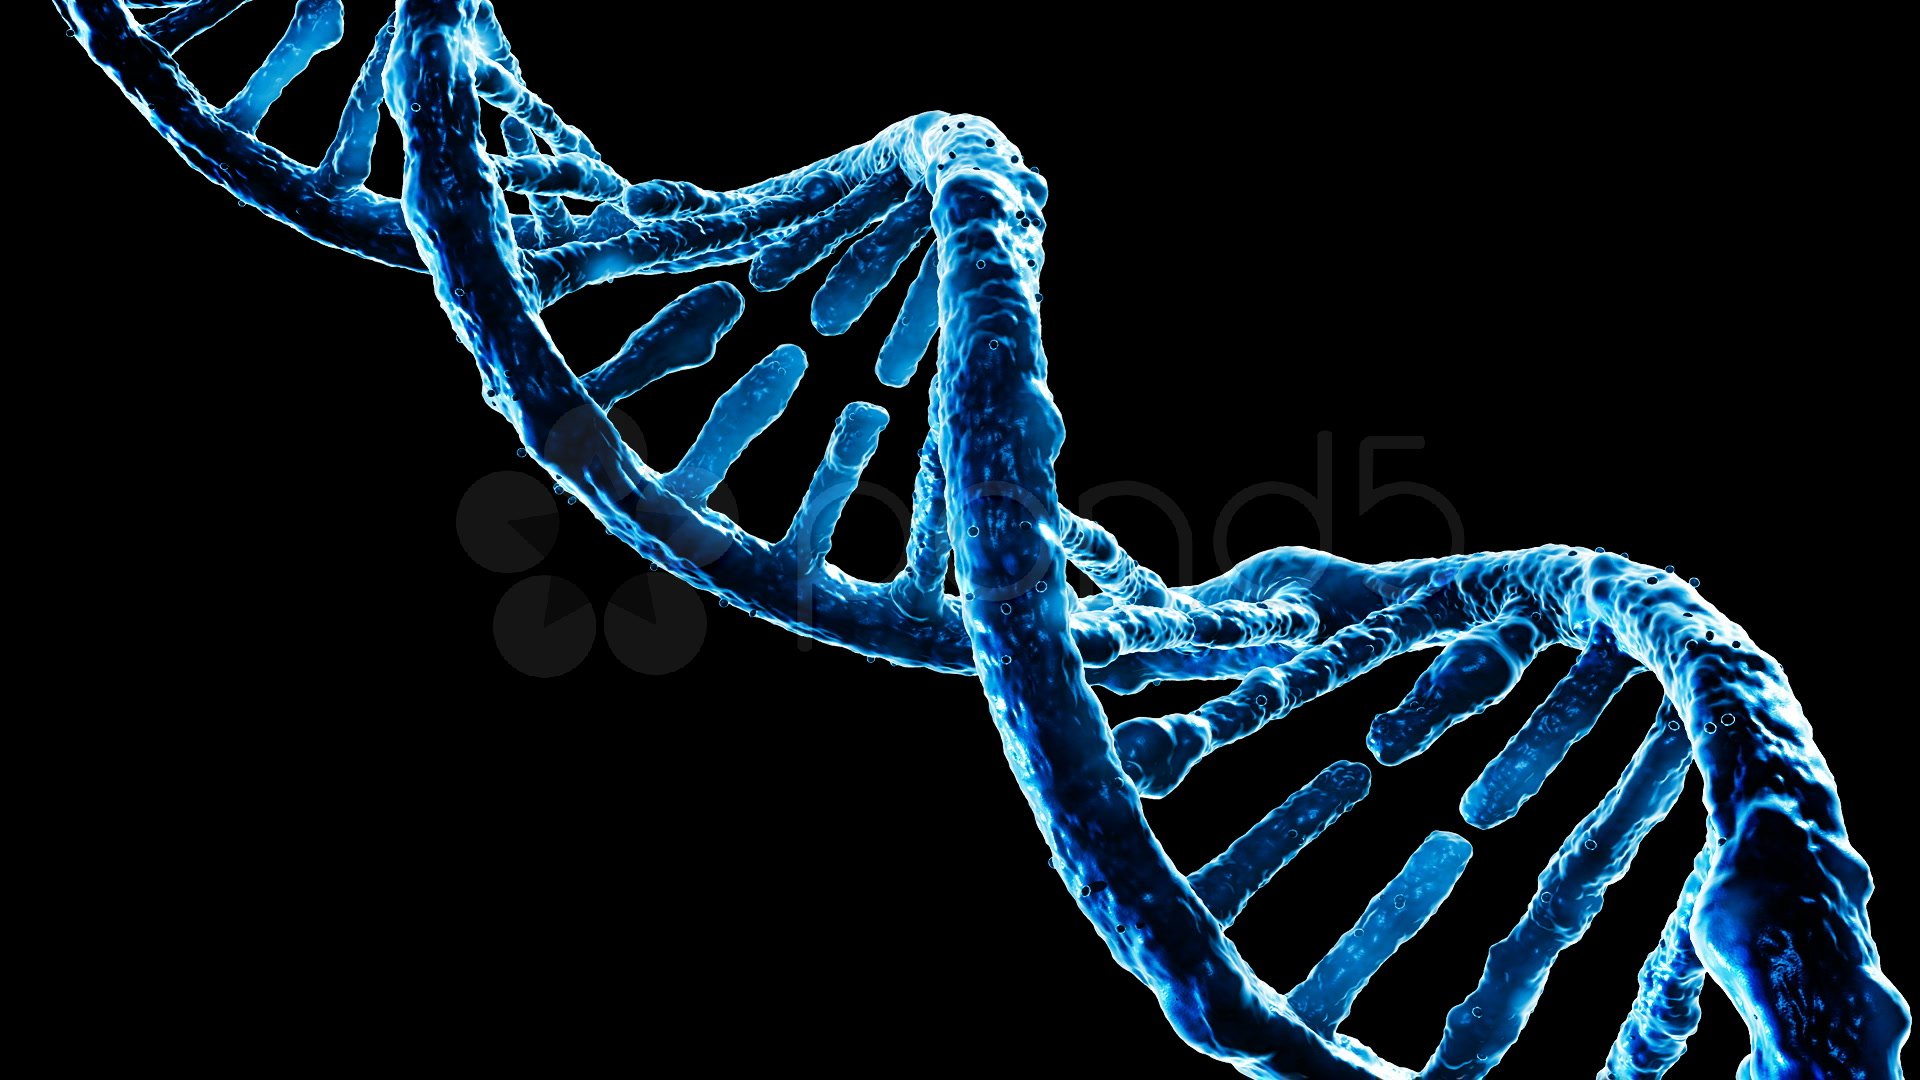 3D DNA WALLPAPER image galleries   imageKBcom 1920x1080